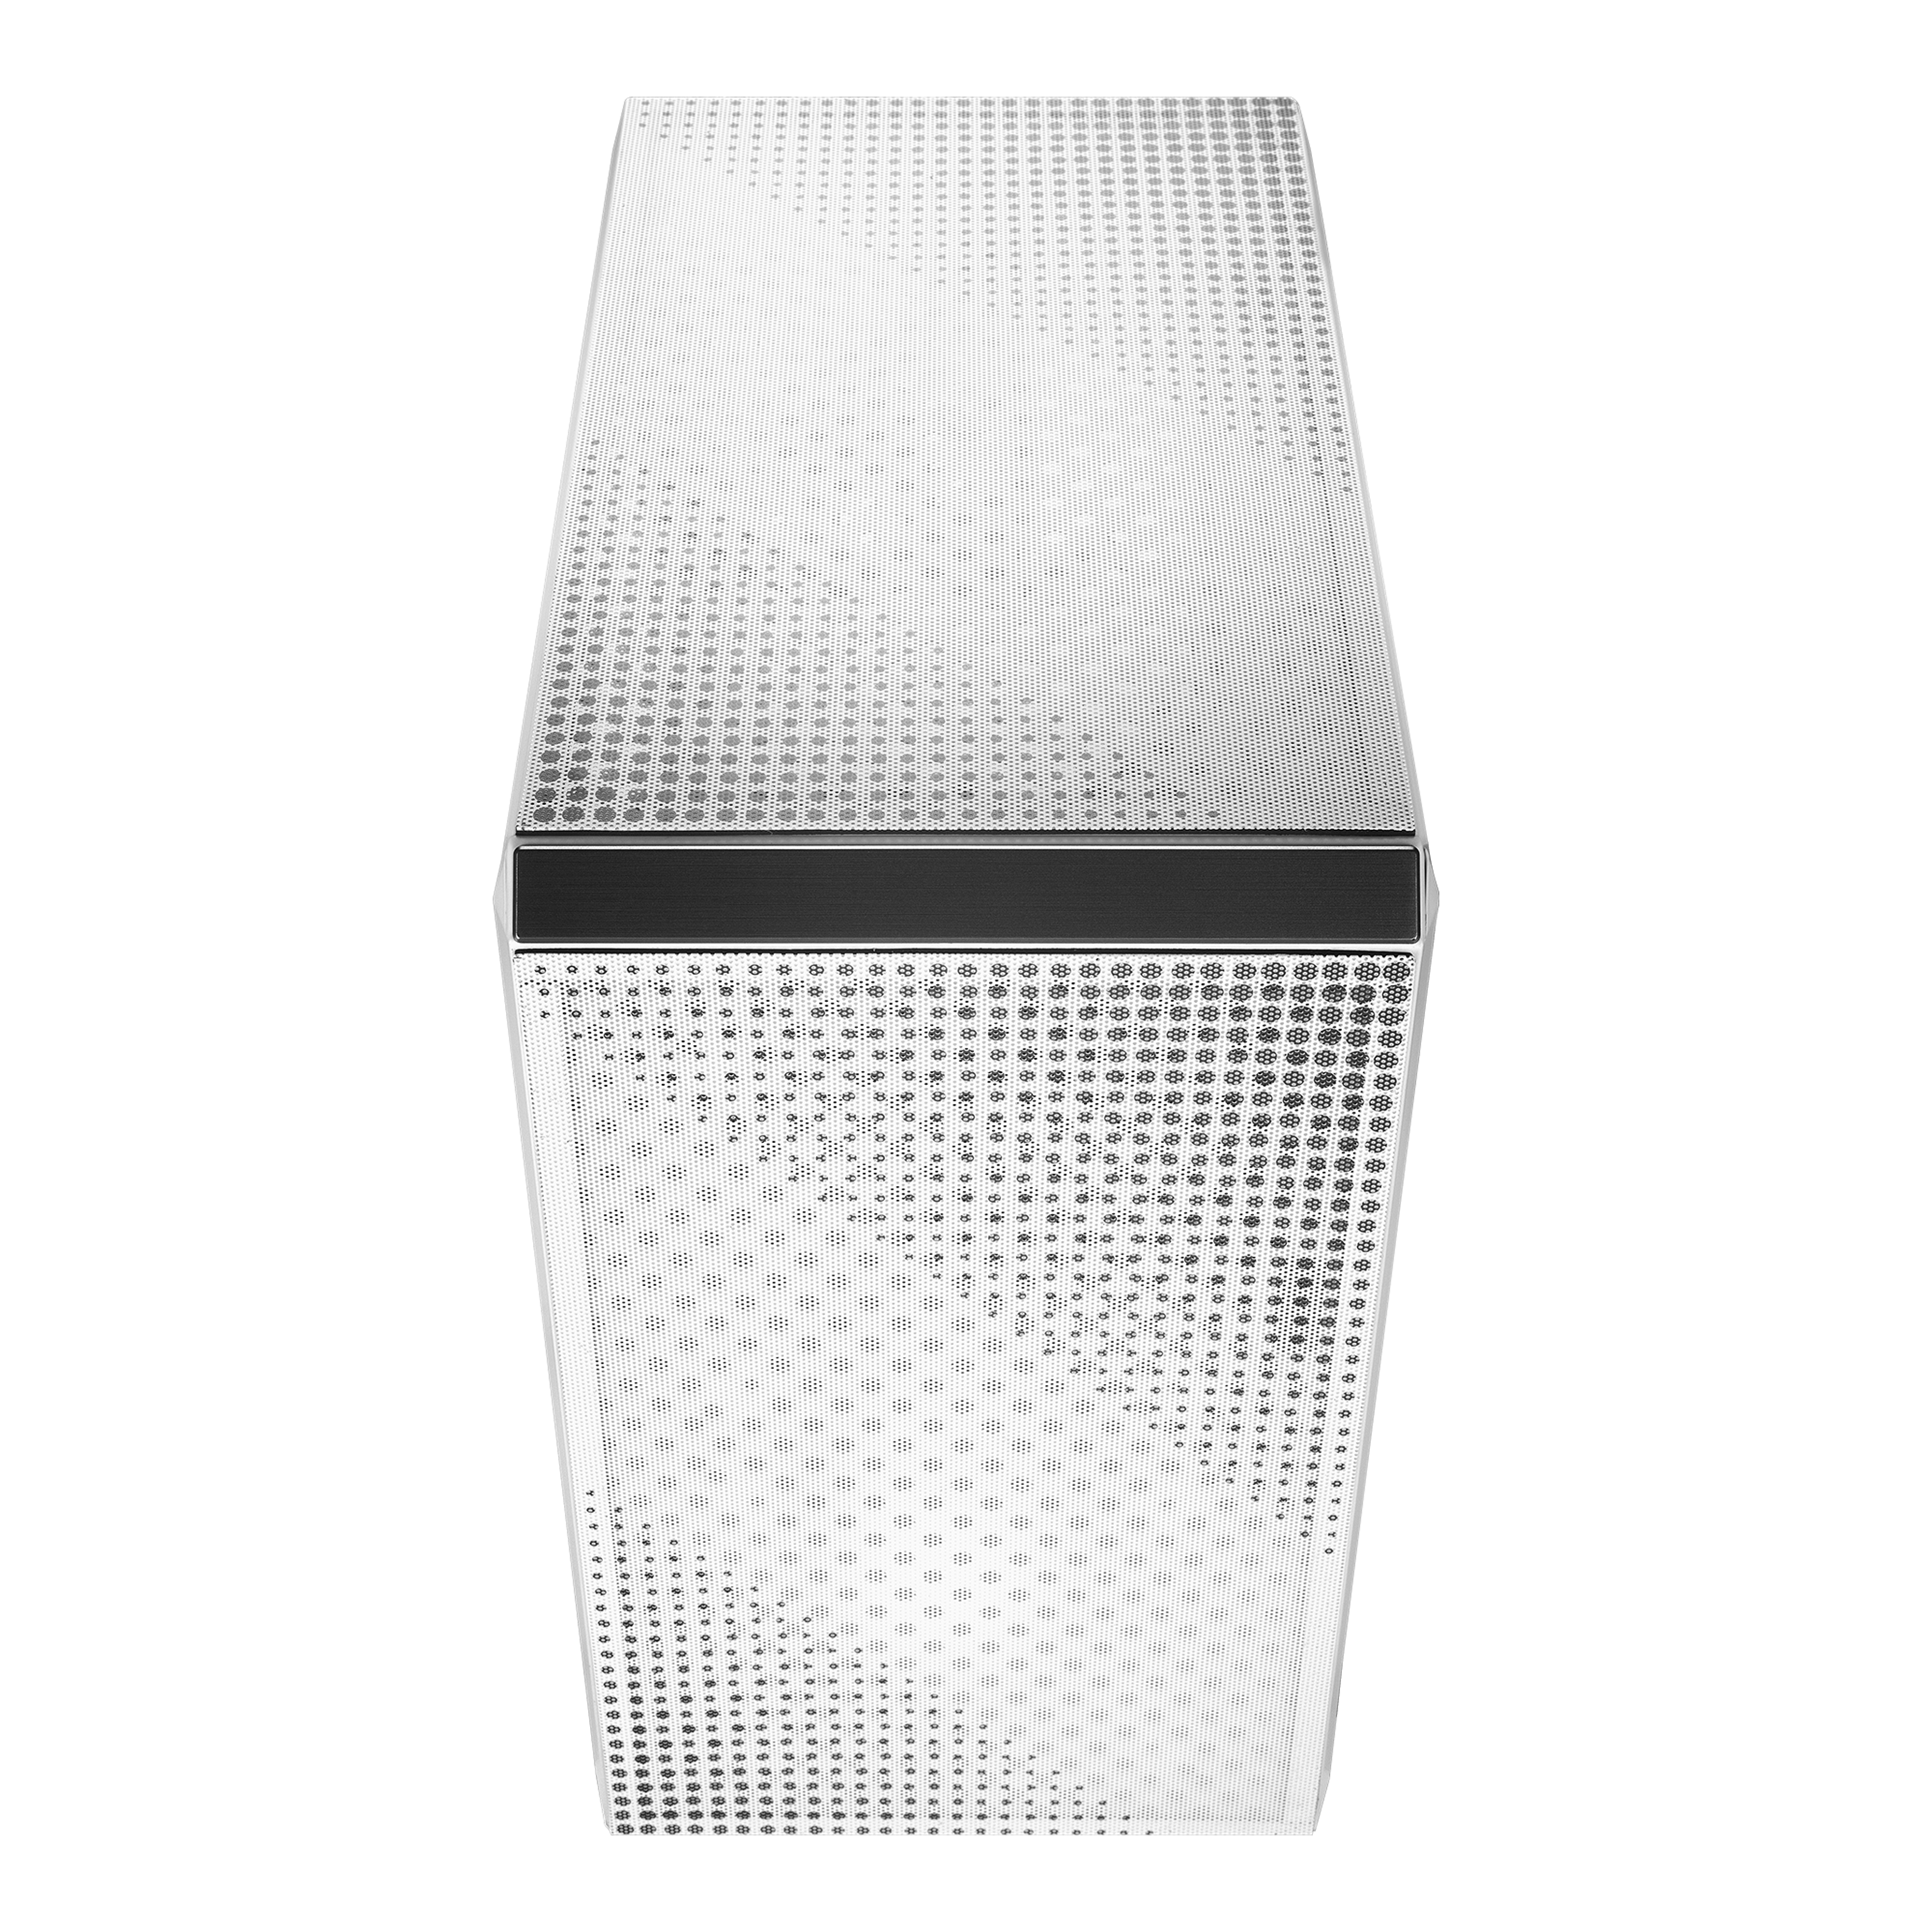 MasterBox Q300L White Mini Tower PC Case